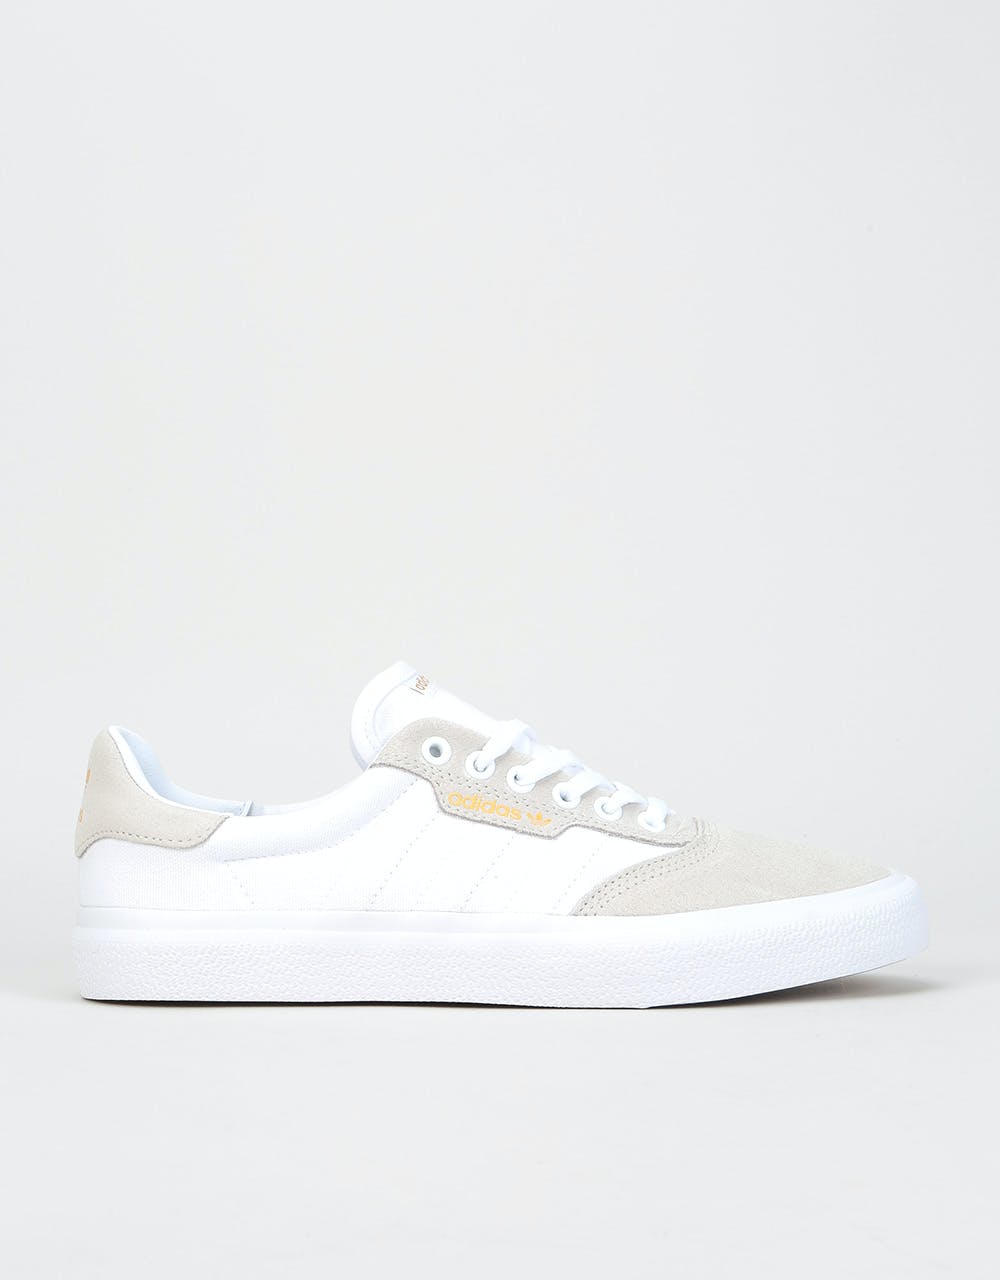 Adidas 3MC Skate Shoes - White/Clear Brown/Gold Metallic